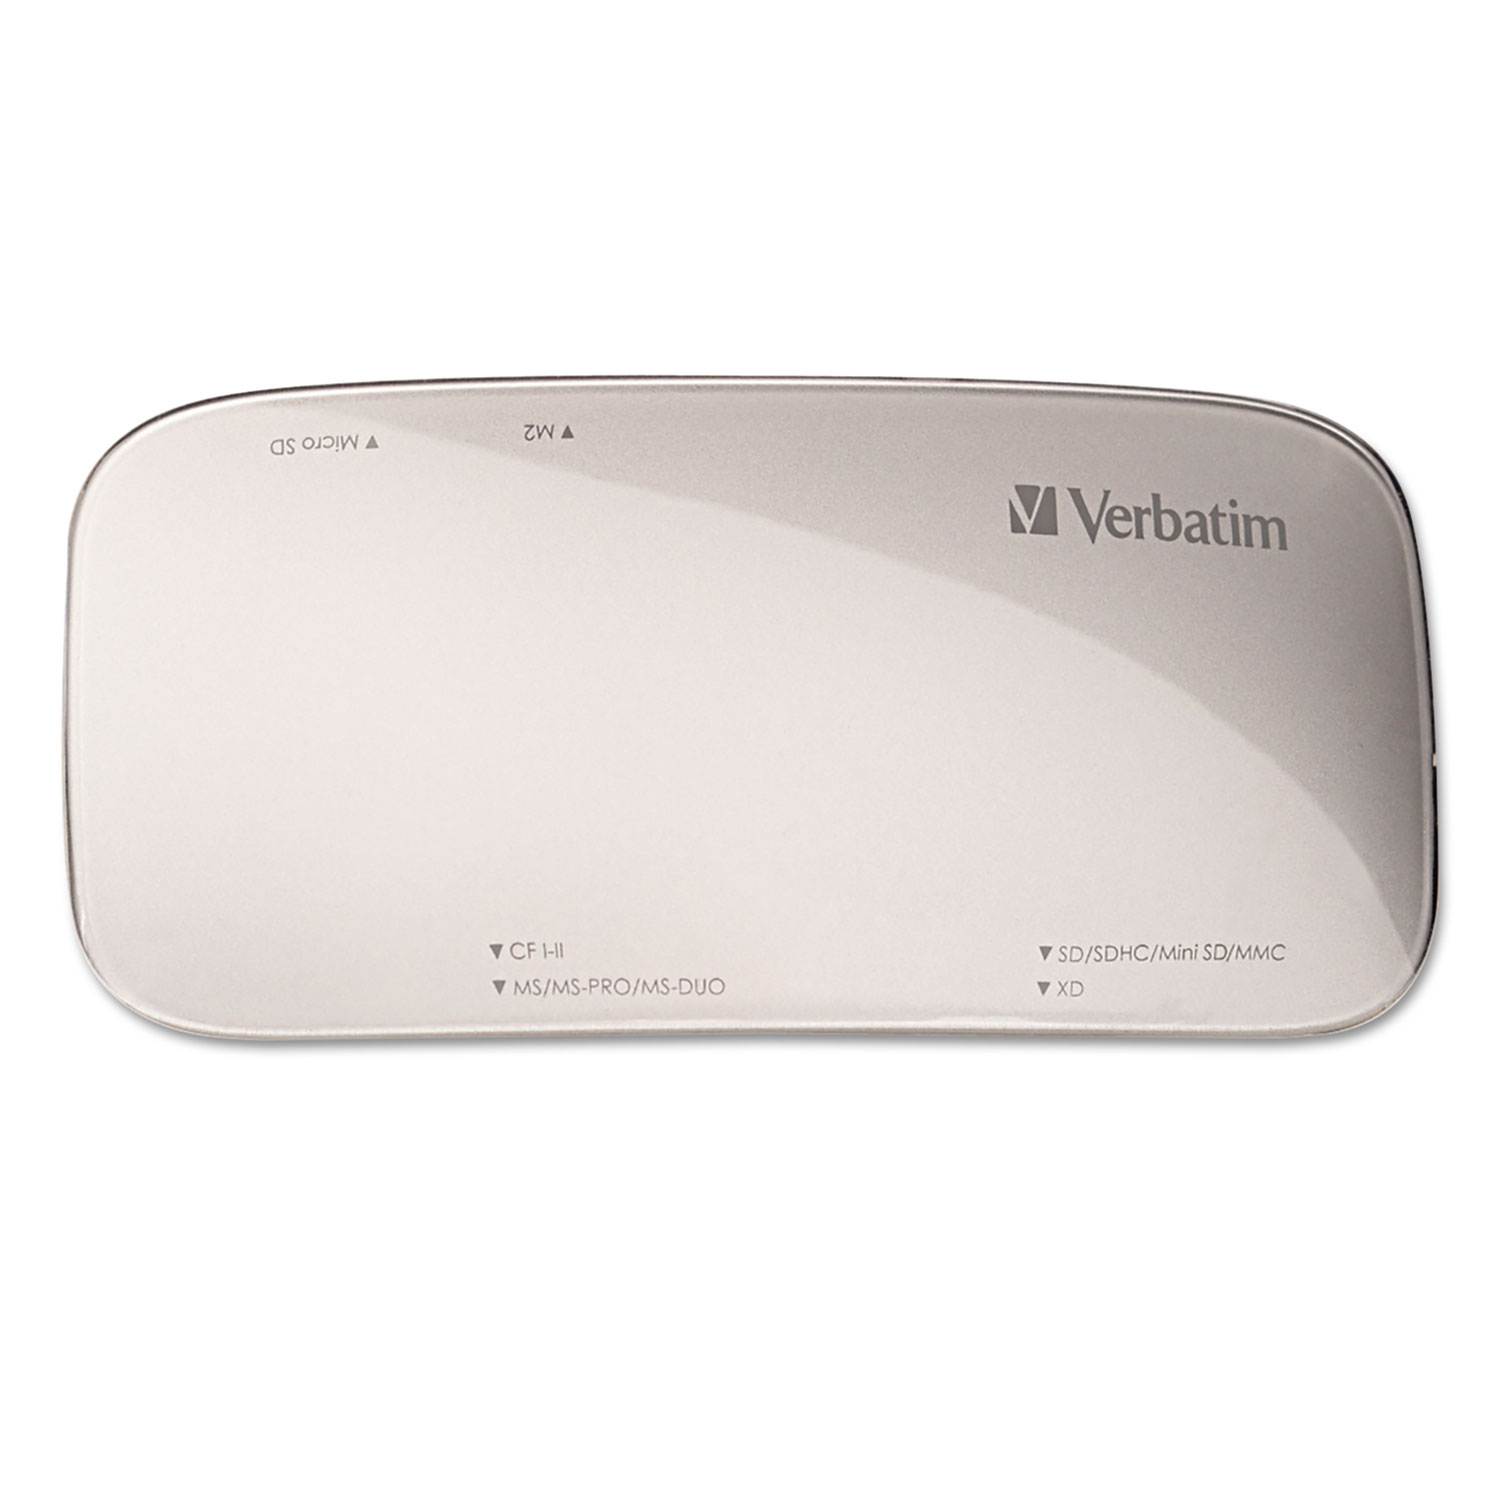  Verbatim 97706 Universal Card Reader, USB 3.0, Silver, Windows/Mac (VER97706) 